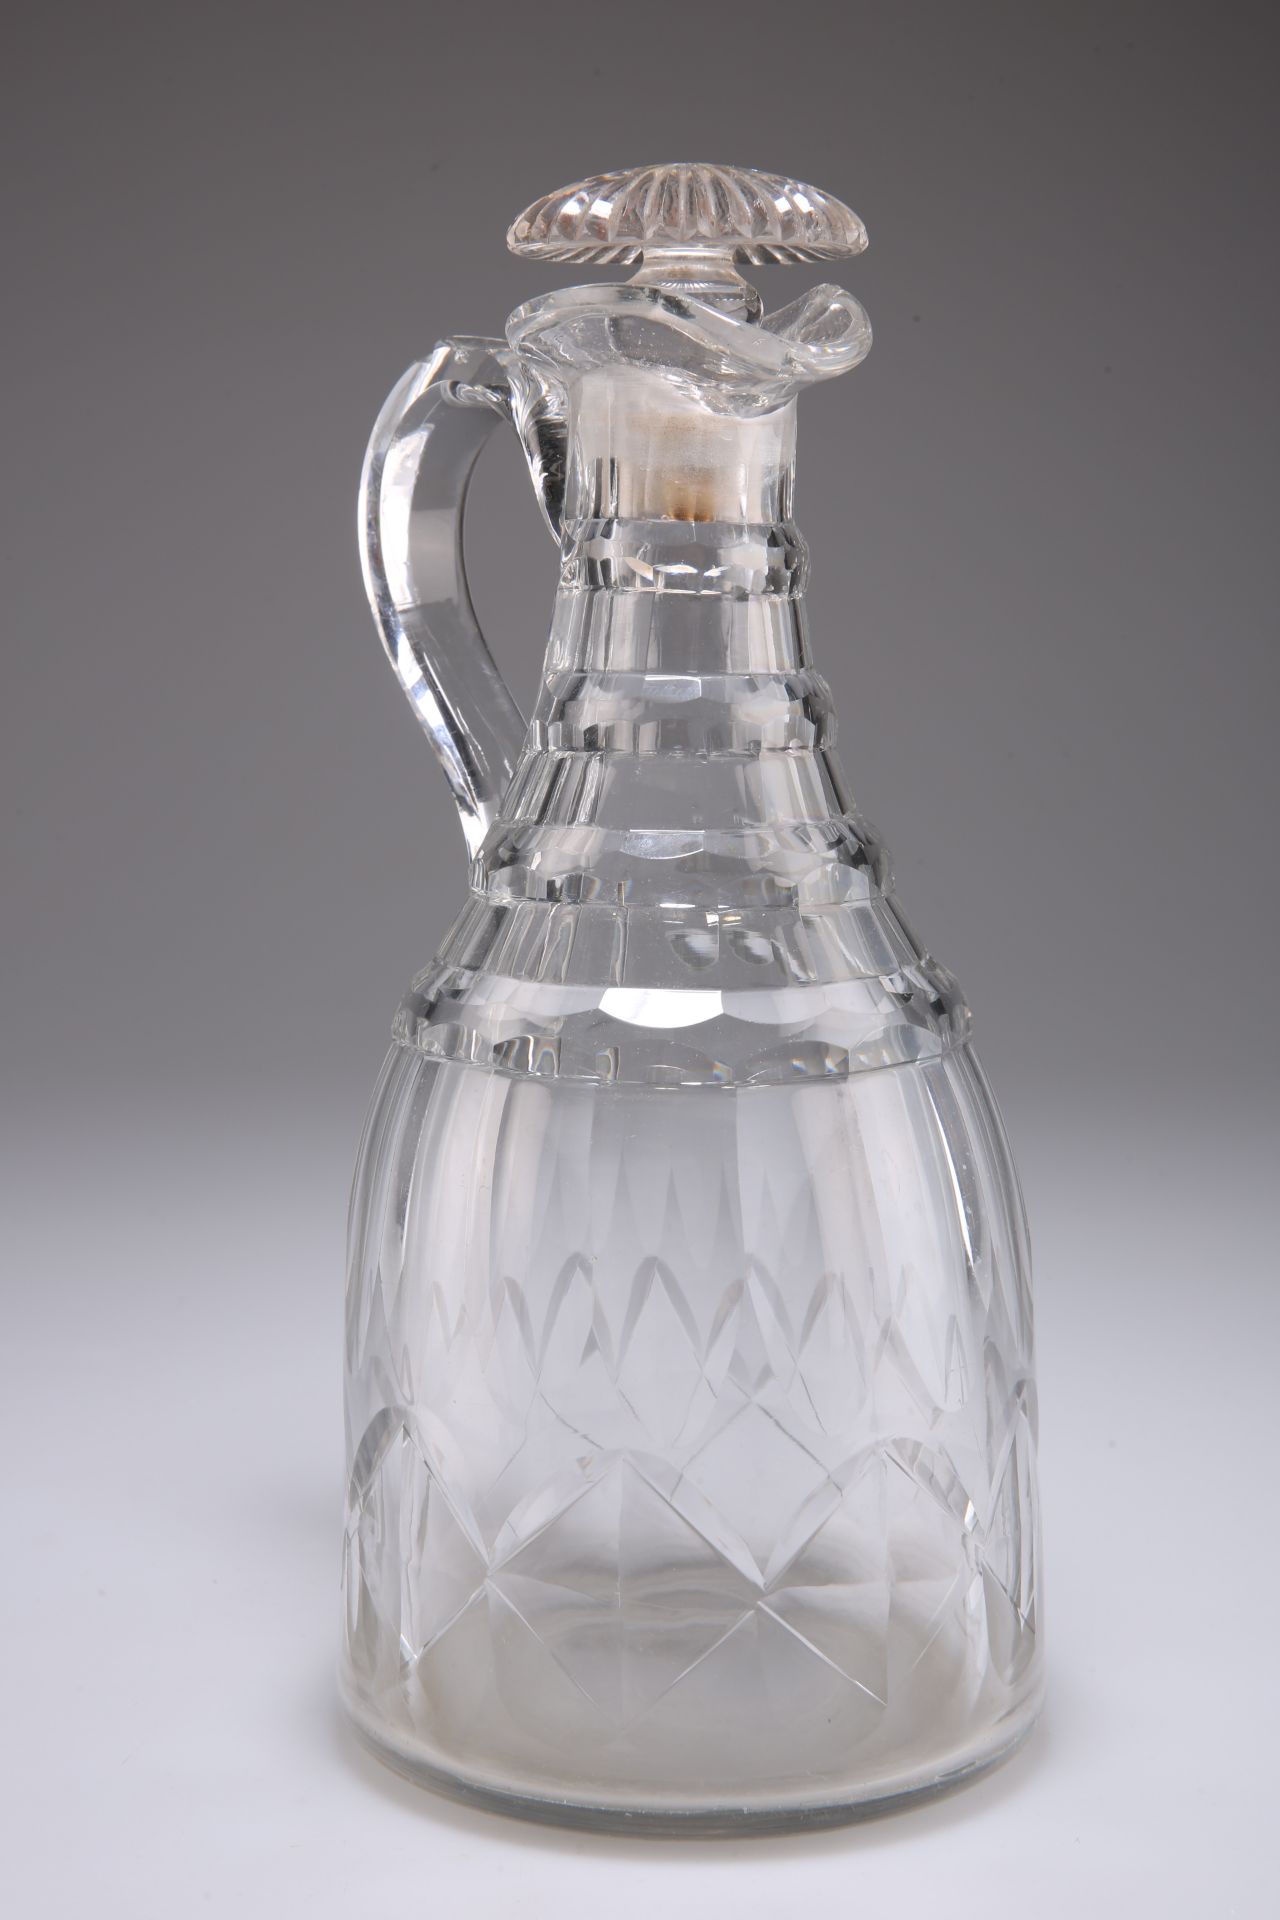 A GEORGIAN CUT-GLASS CLARET JUG - Image 3 of 3